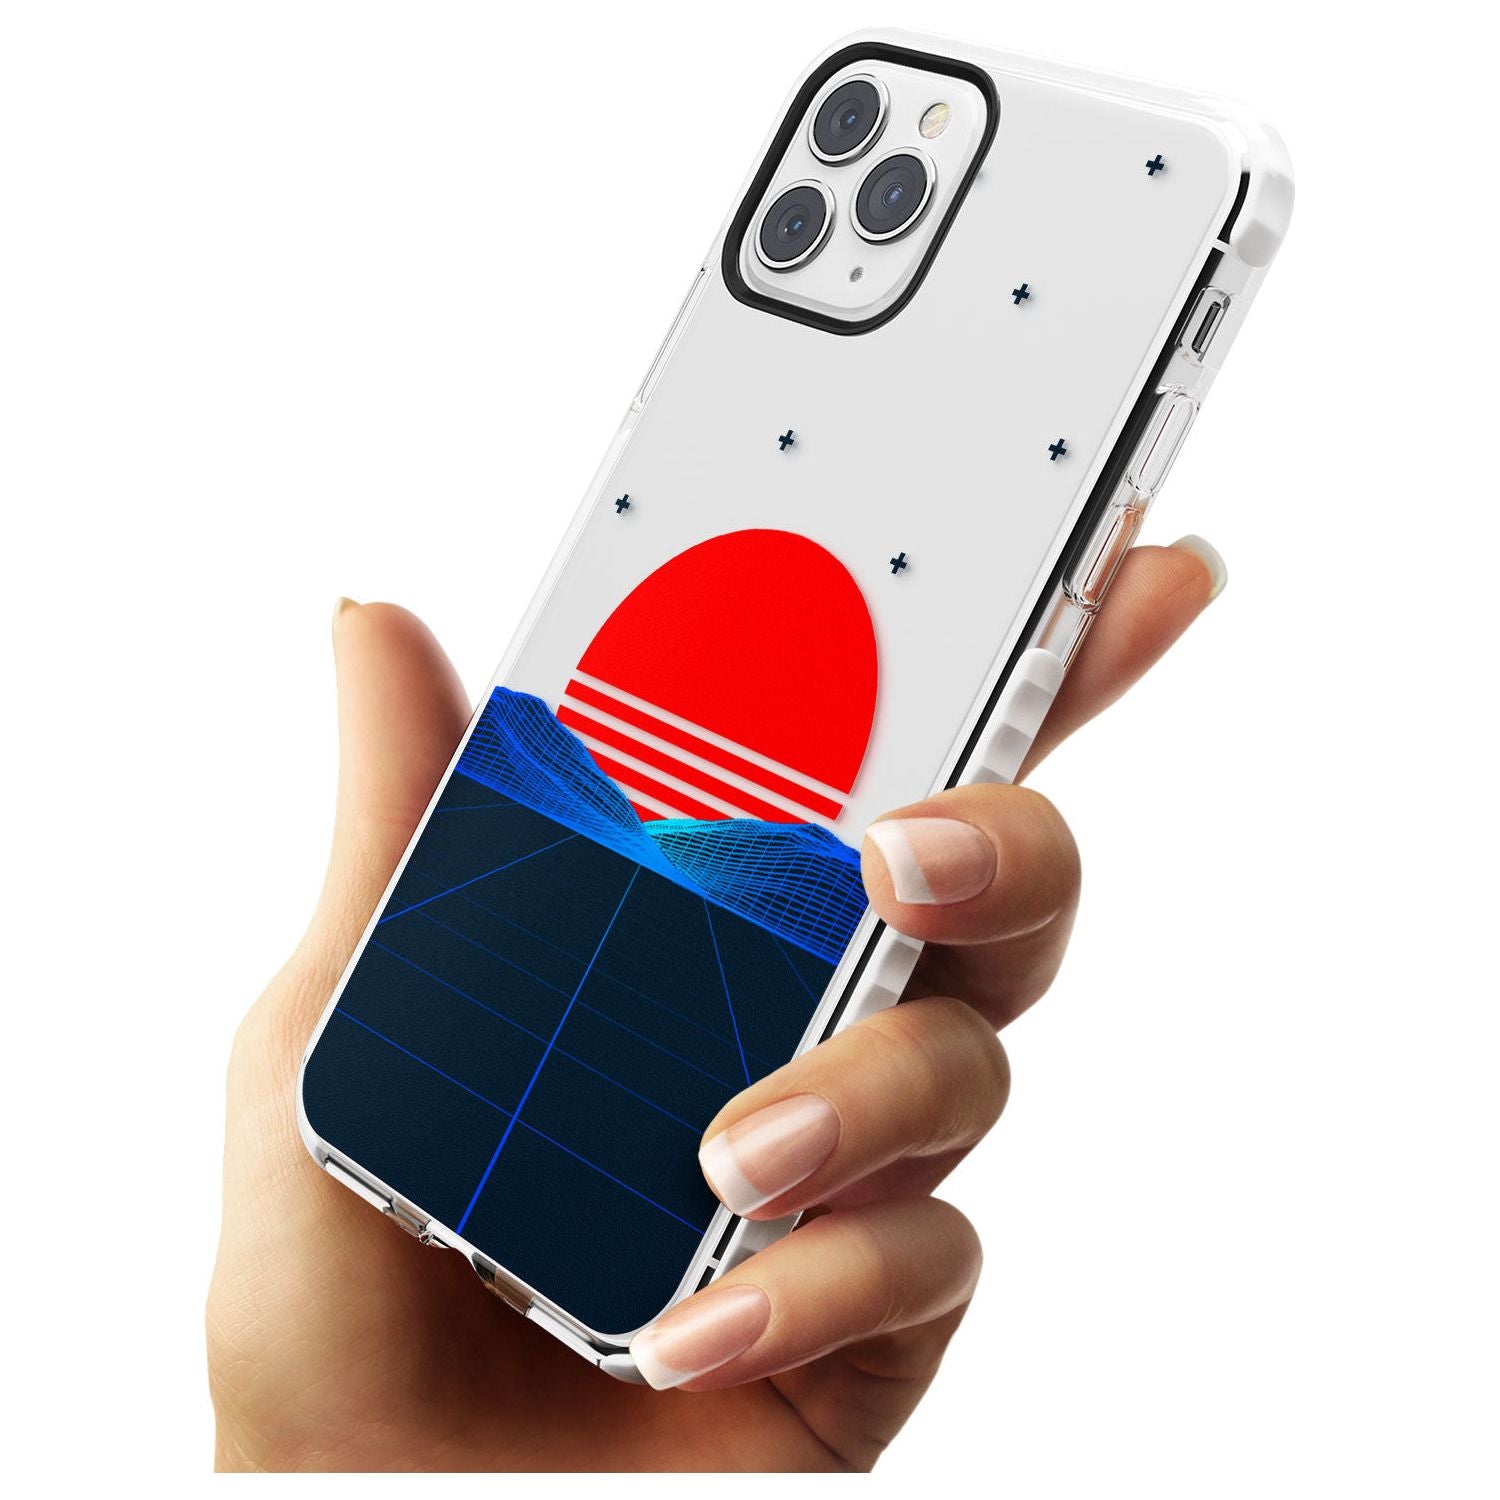 Japanese Sunset Vaporwave Impact Phone Case for iPhone 11 Pro Max